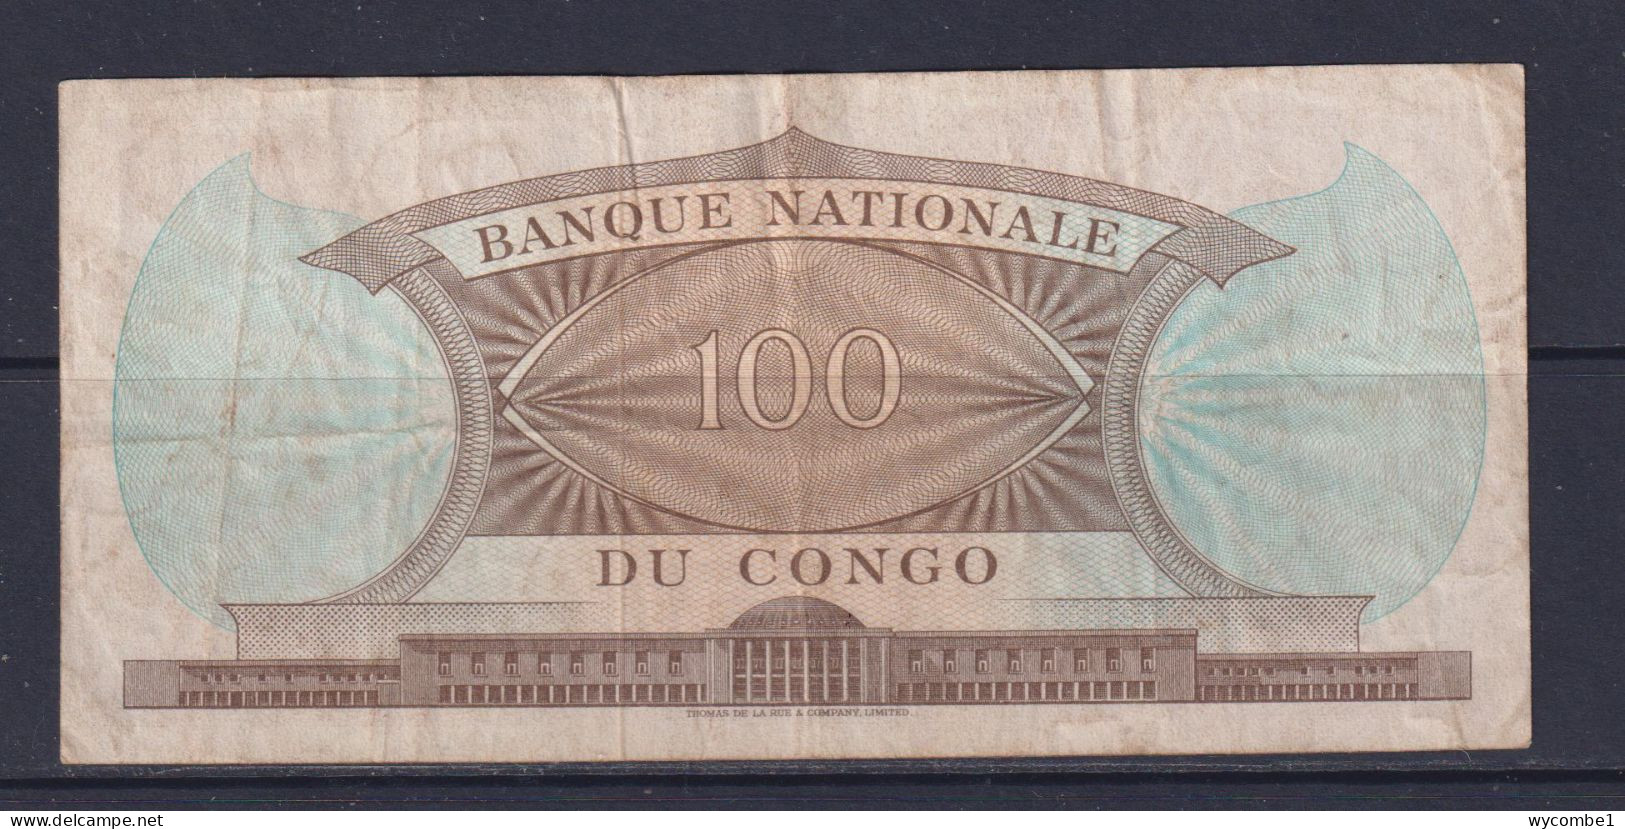 CONGO DR - 1962 100 Francs Circulated Banknote - Democratic Republic Of The Congo & Zaire